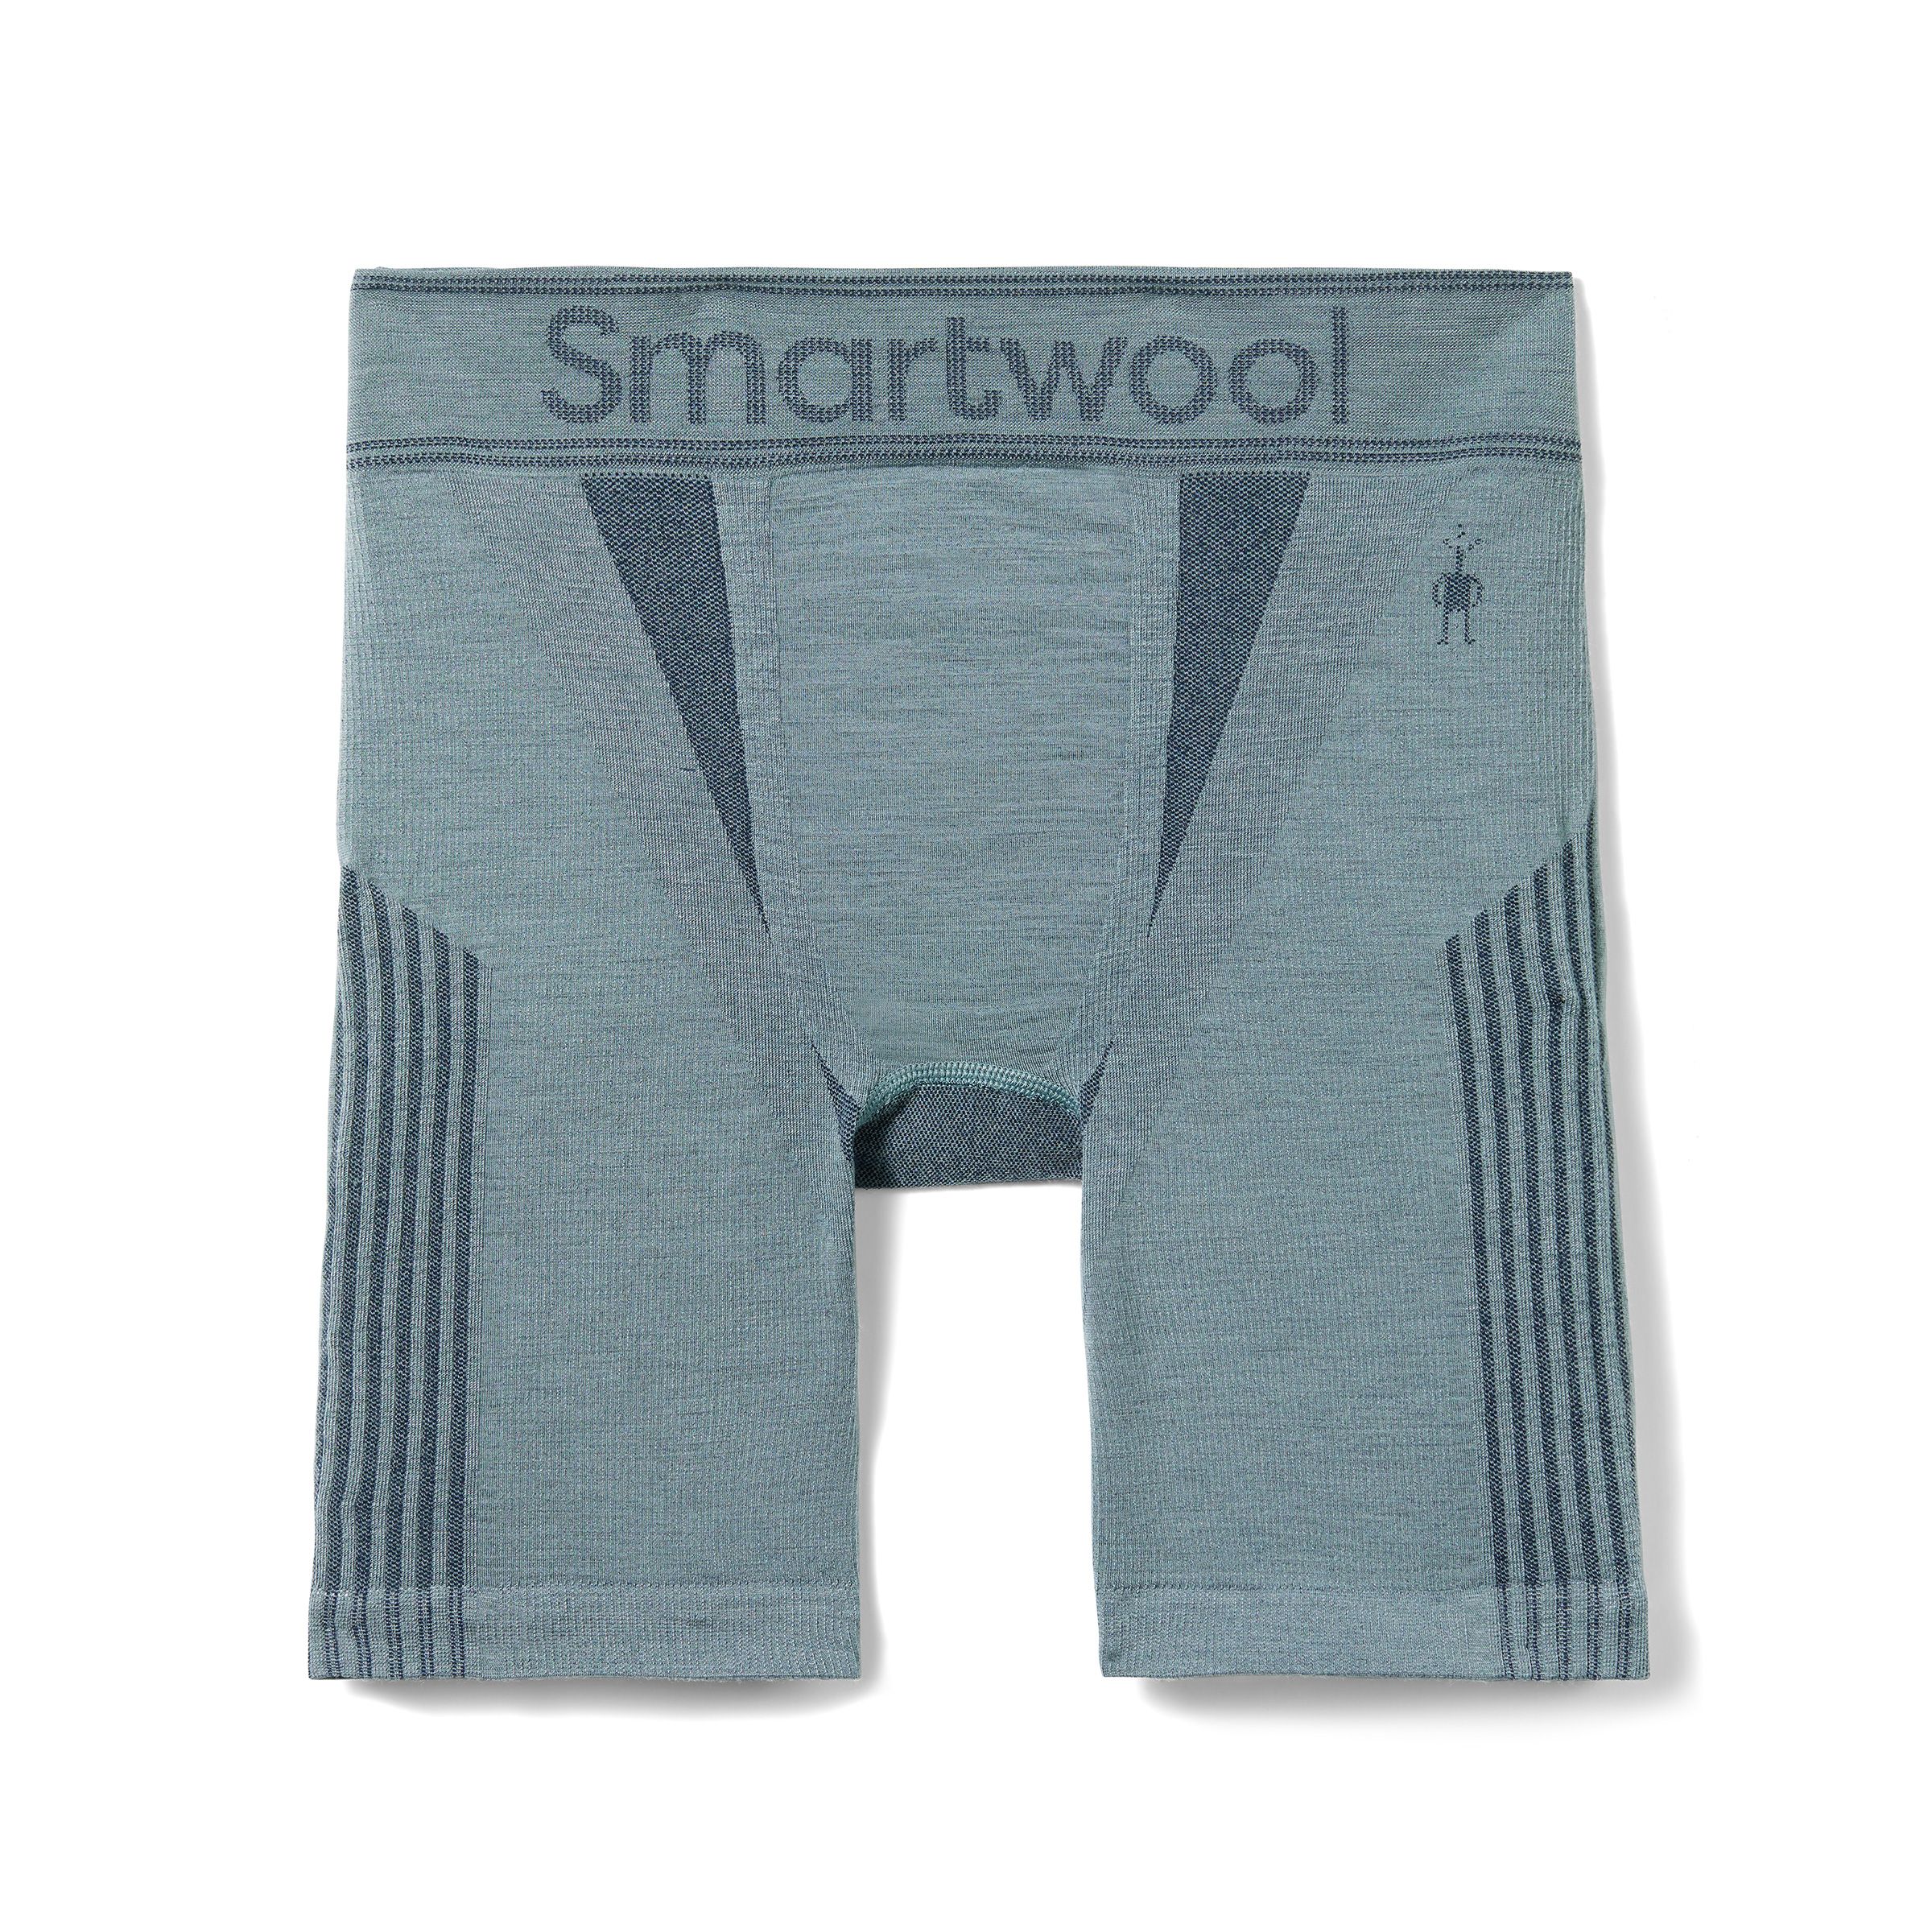  Merinotech Merino Wool Underwear Mens - 100% Merino Wool  Base Layer Boxer Briefs For Men